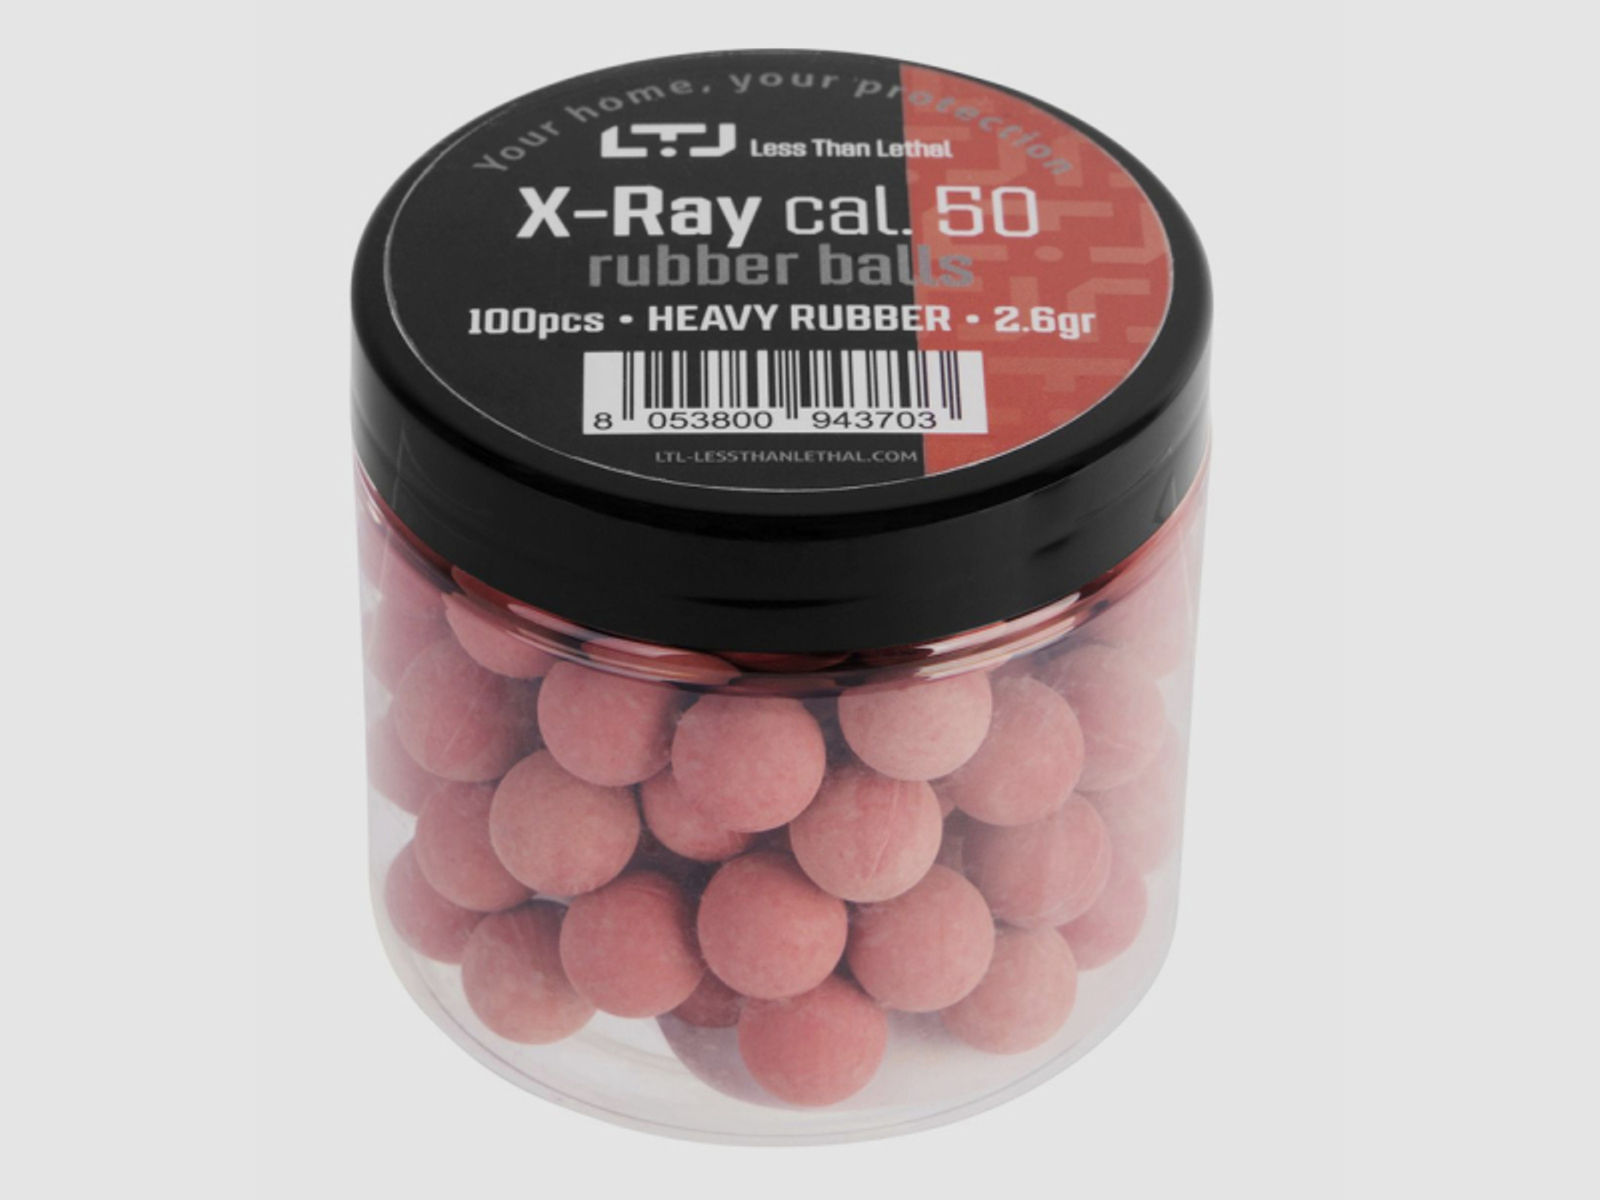 100er Dose LTL X-RaY Heavy Rubber Balls CAL. 50 Gummikugeln less then lethal Munition Home Defence !